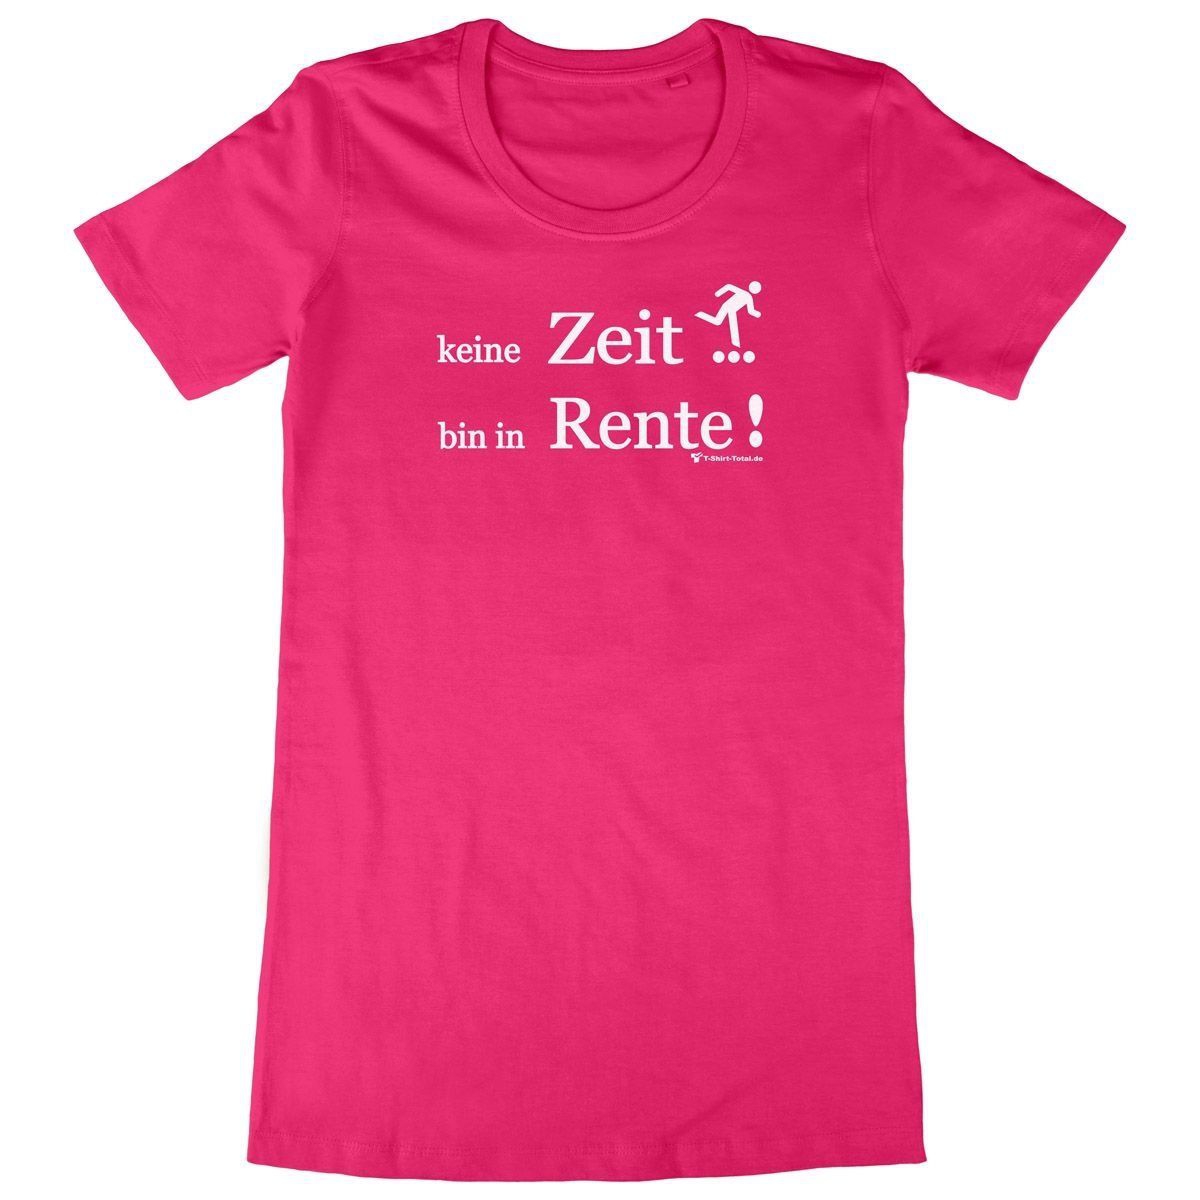 Bin in Rente Woman Long Shirt pink Medium